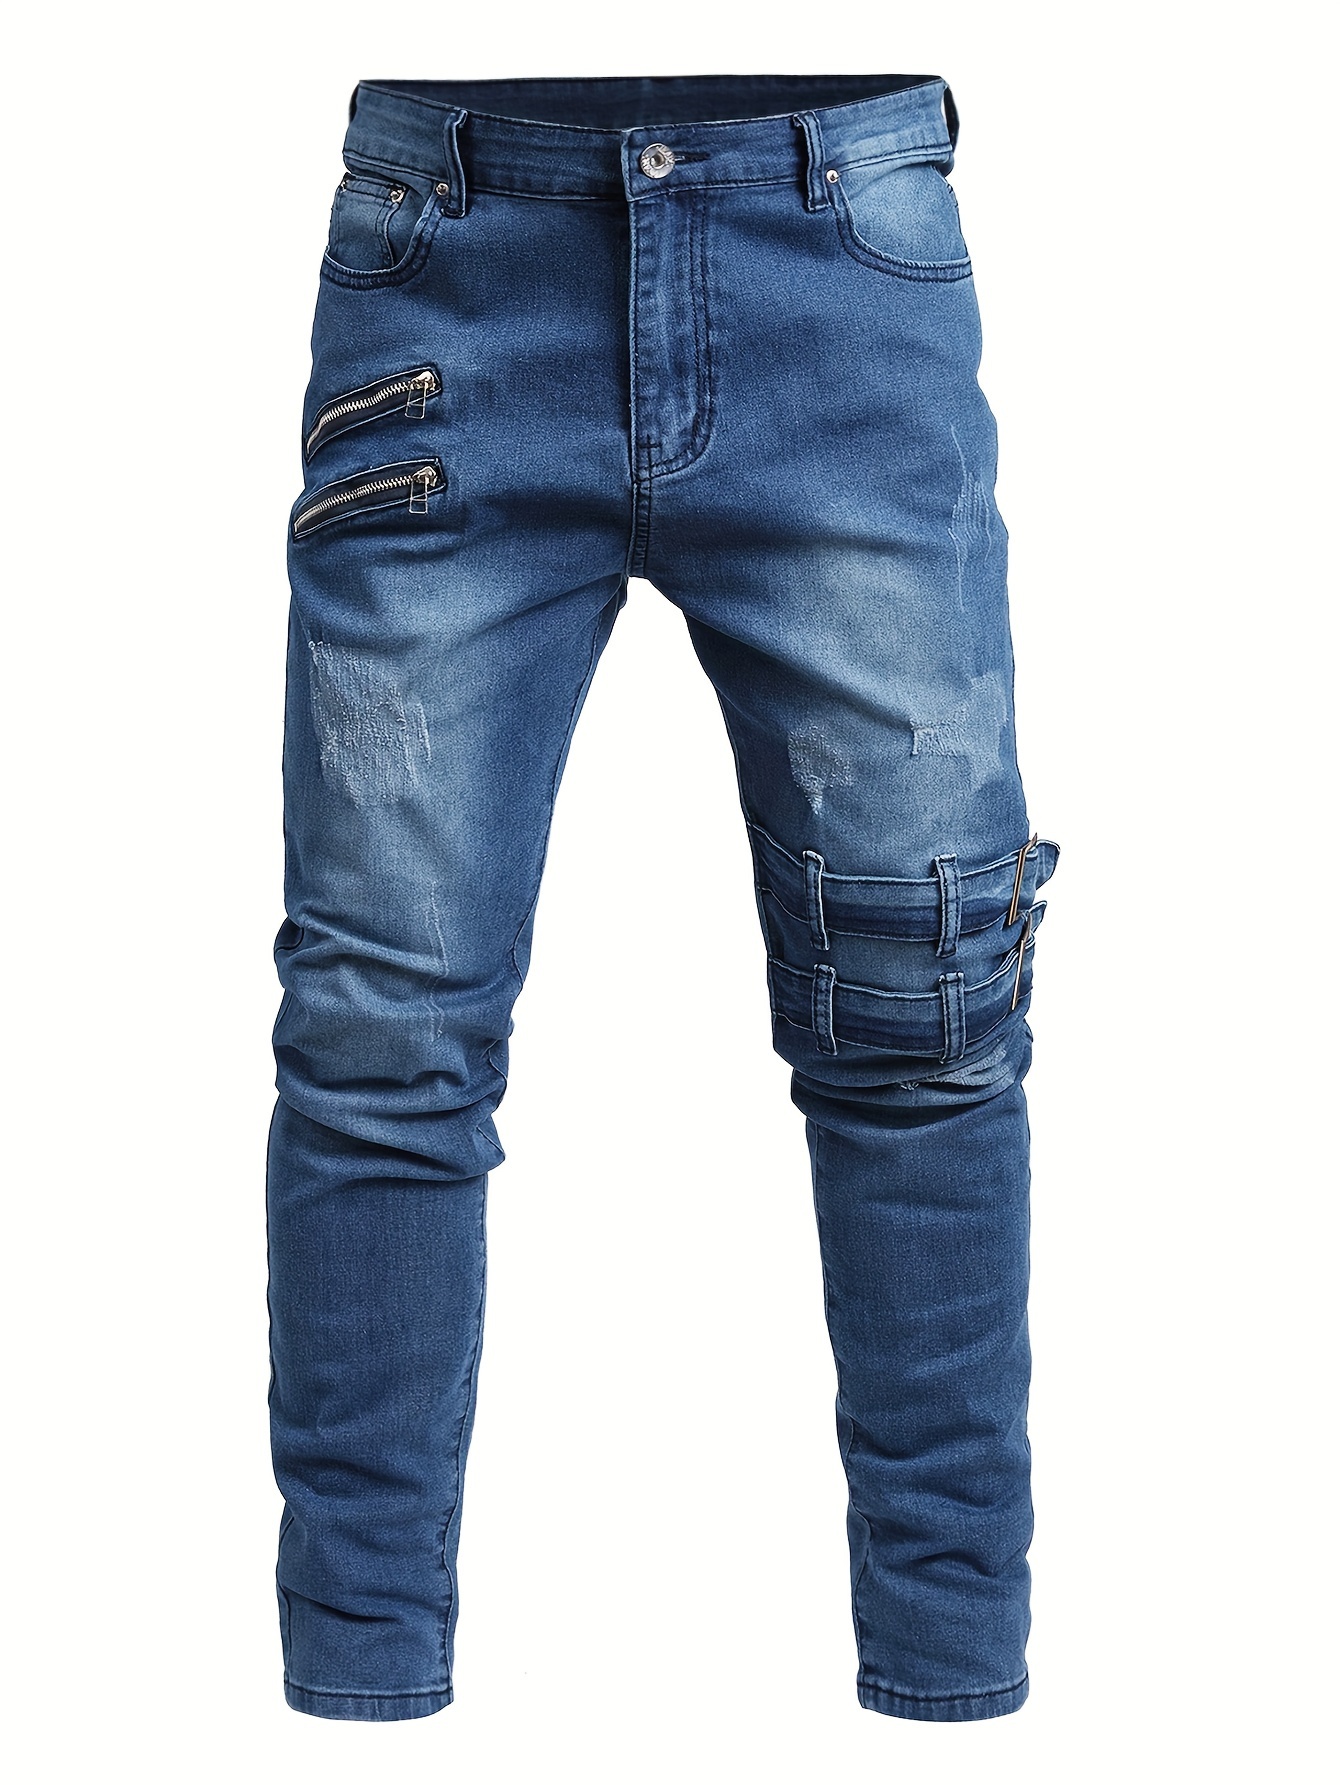 Men's Fashion Slim Fit Distressed Ripped Zipper Stretch Biker Jeans Denim  Pants